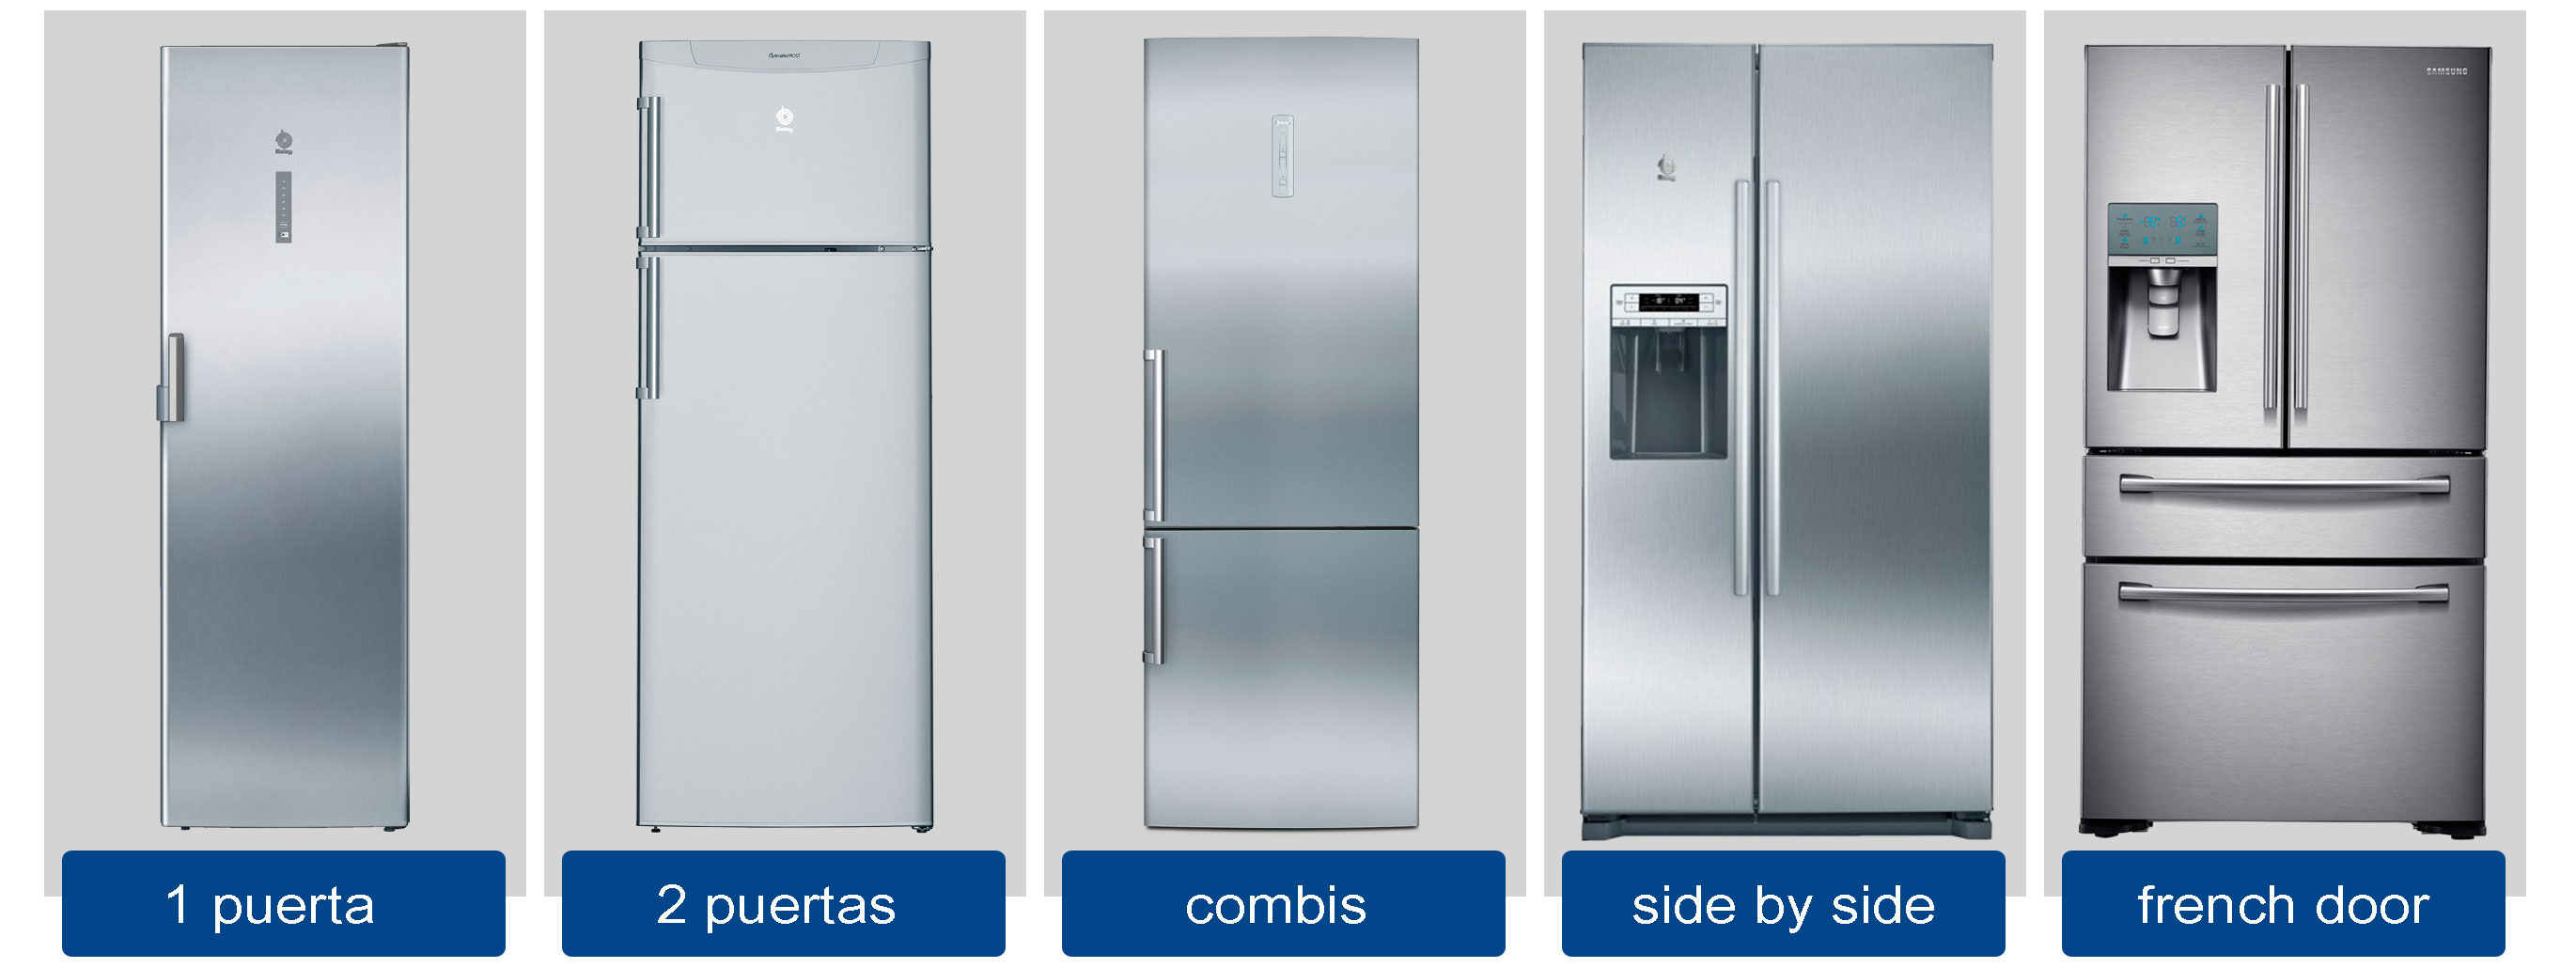 tipos de frigoríficos